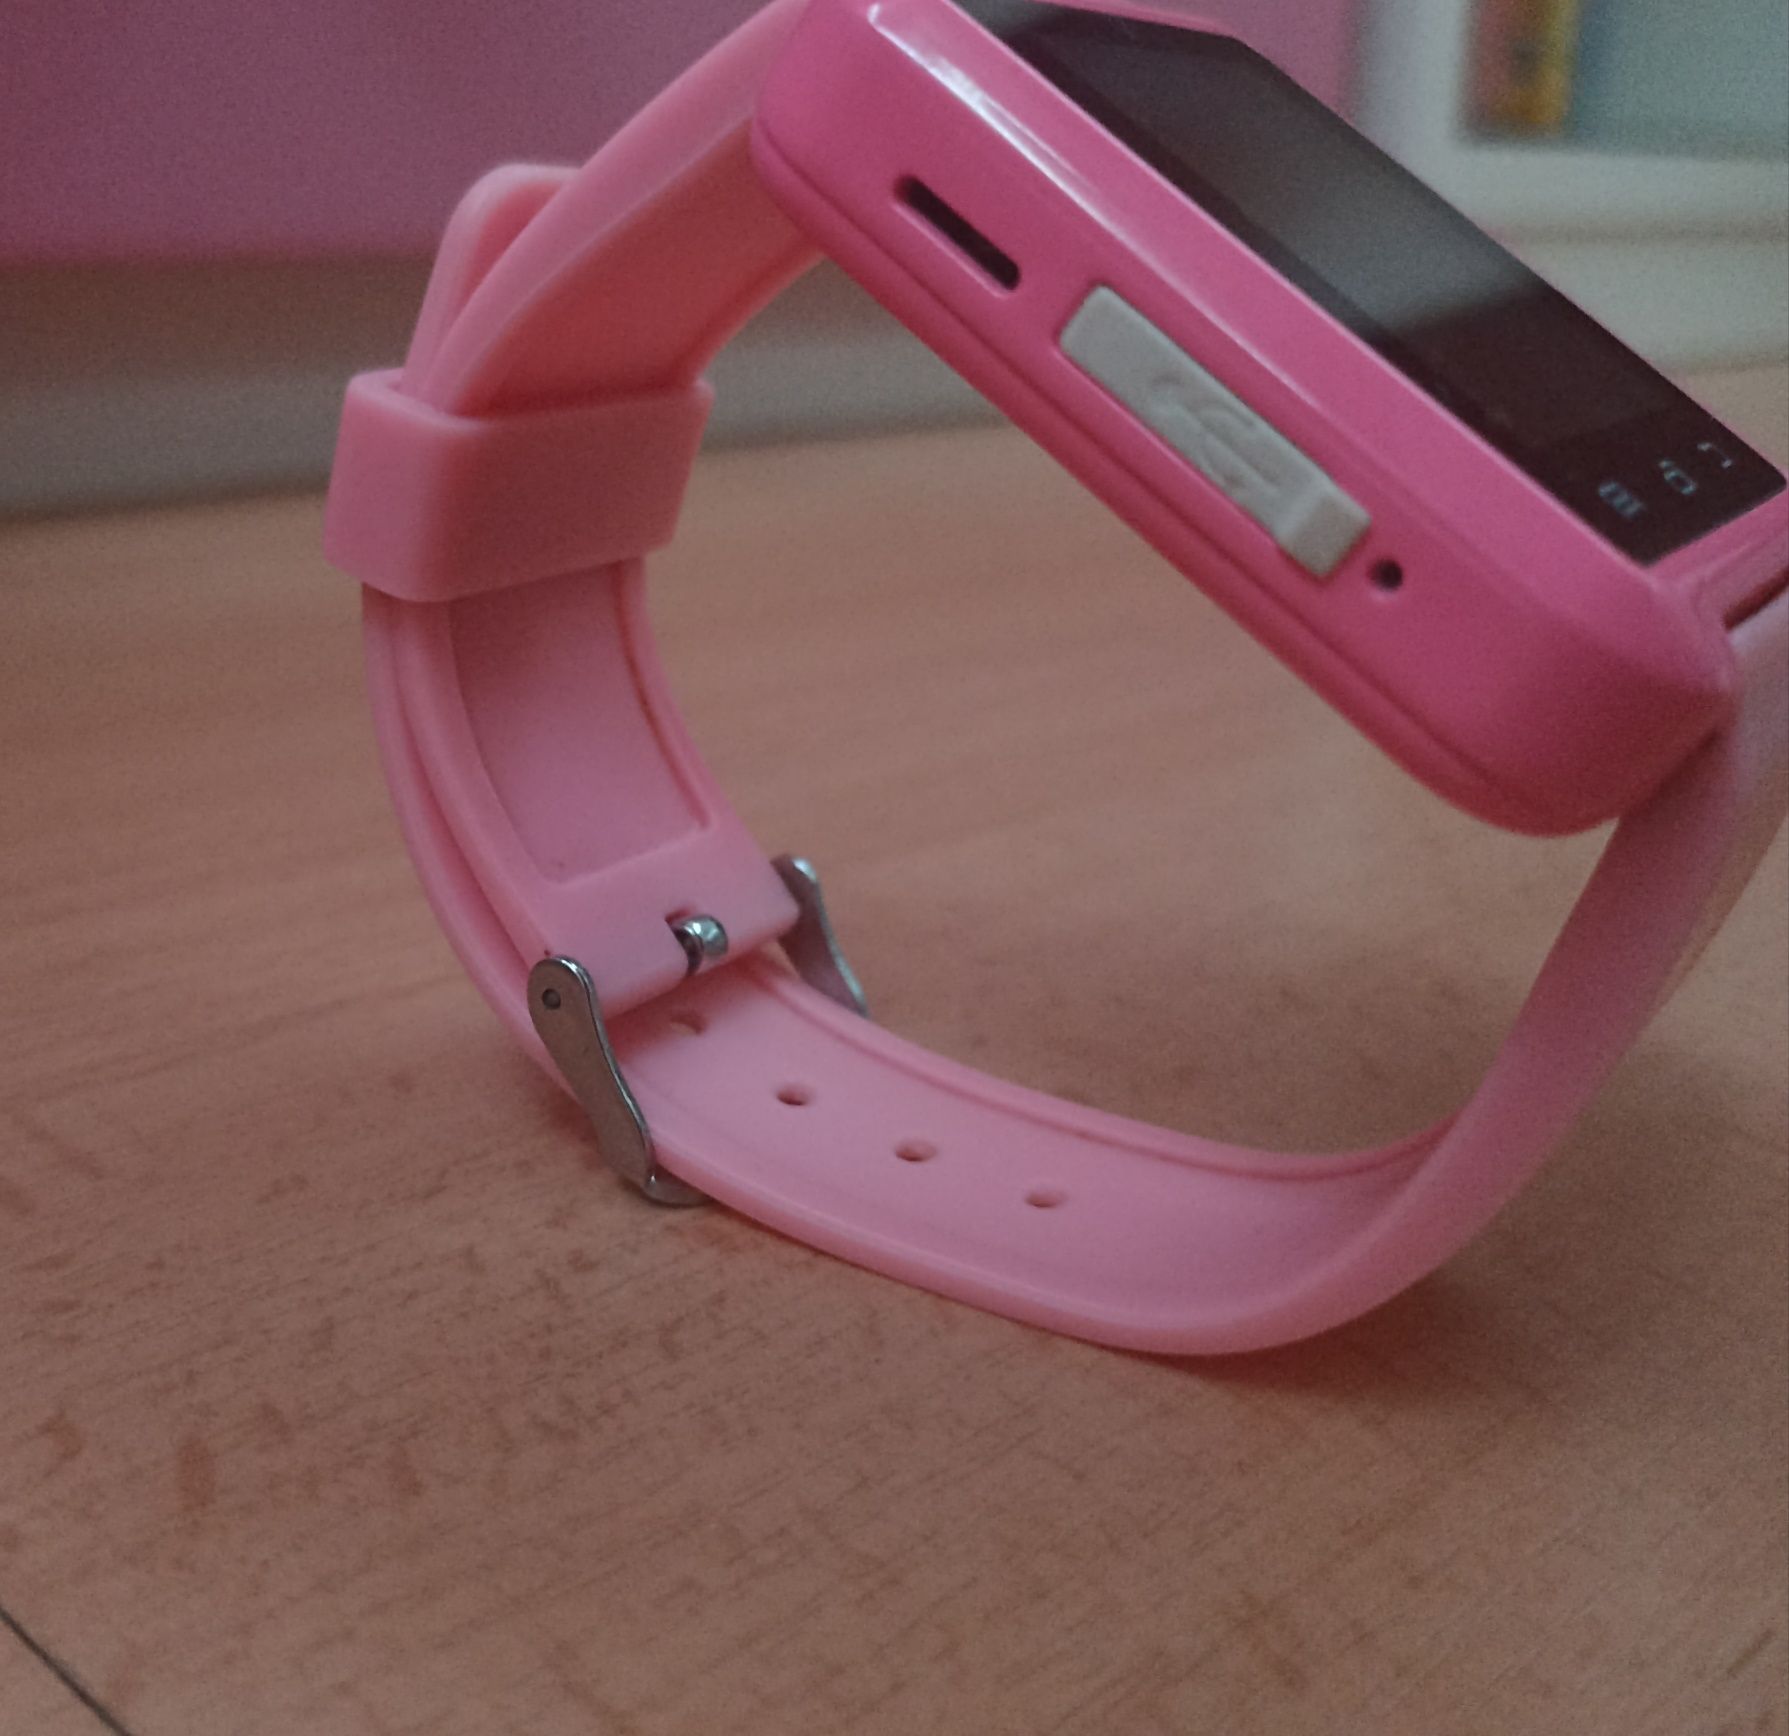 Smartwatch BT rosa